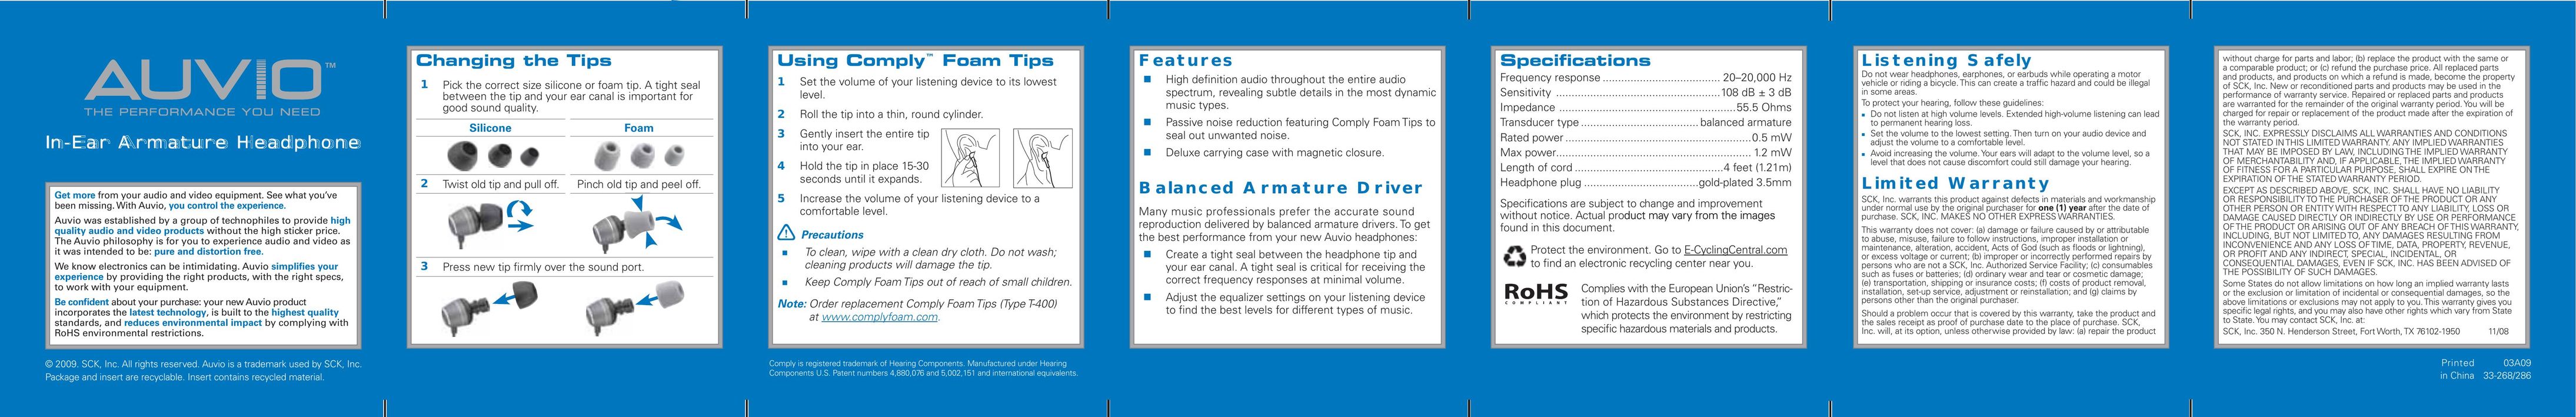 Radio Shack 33-286 Headphones User Manual